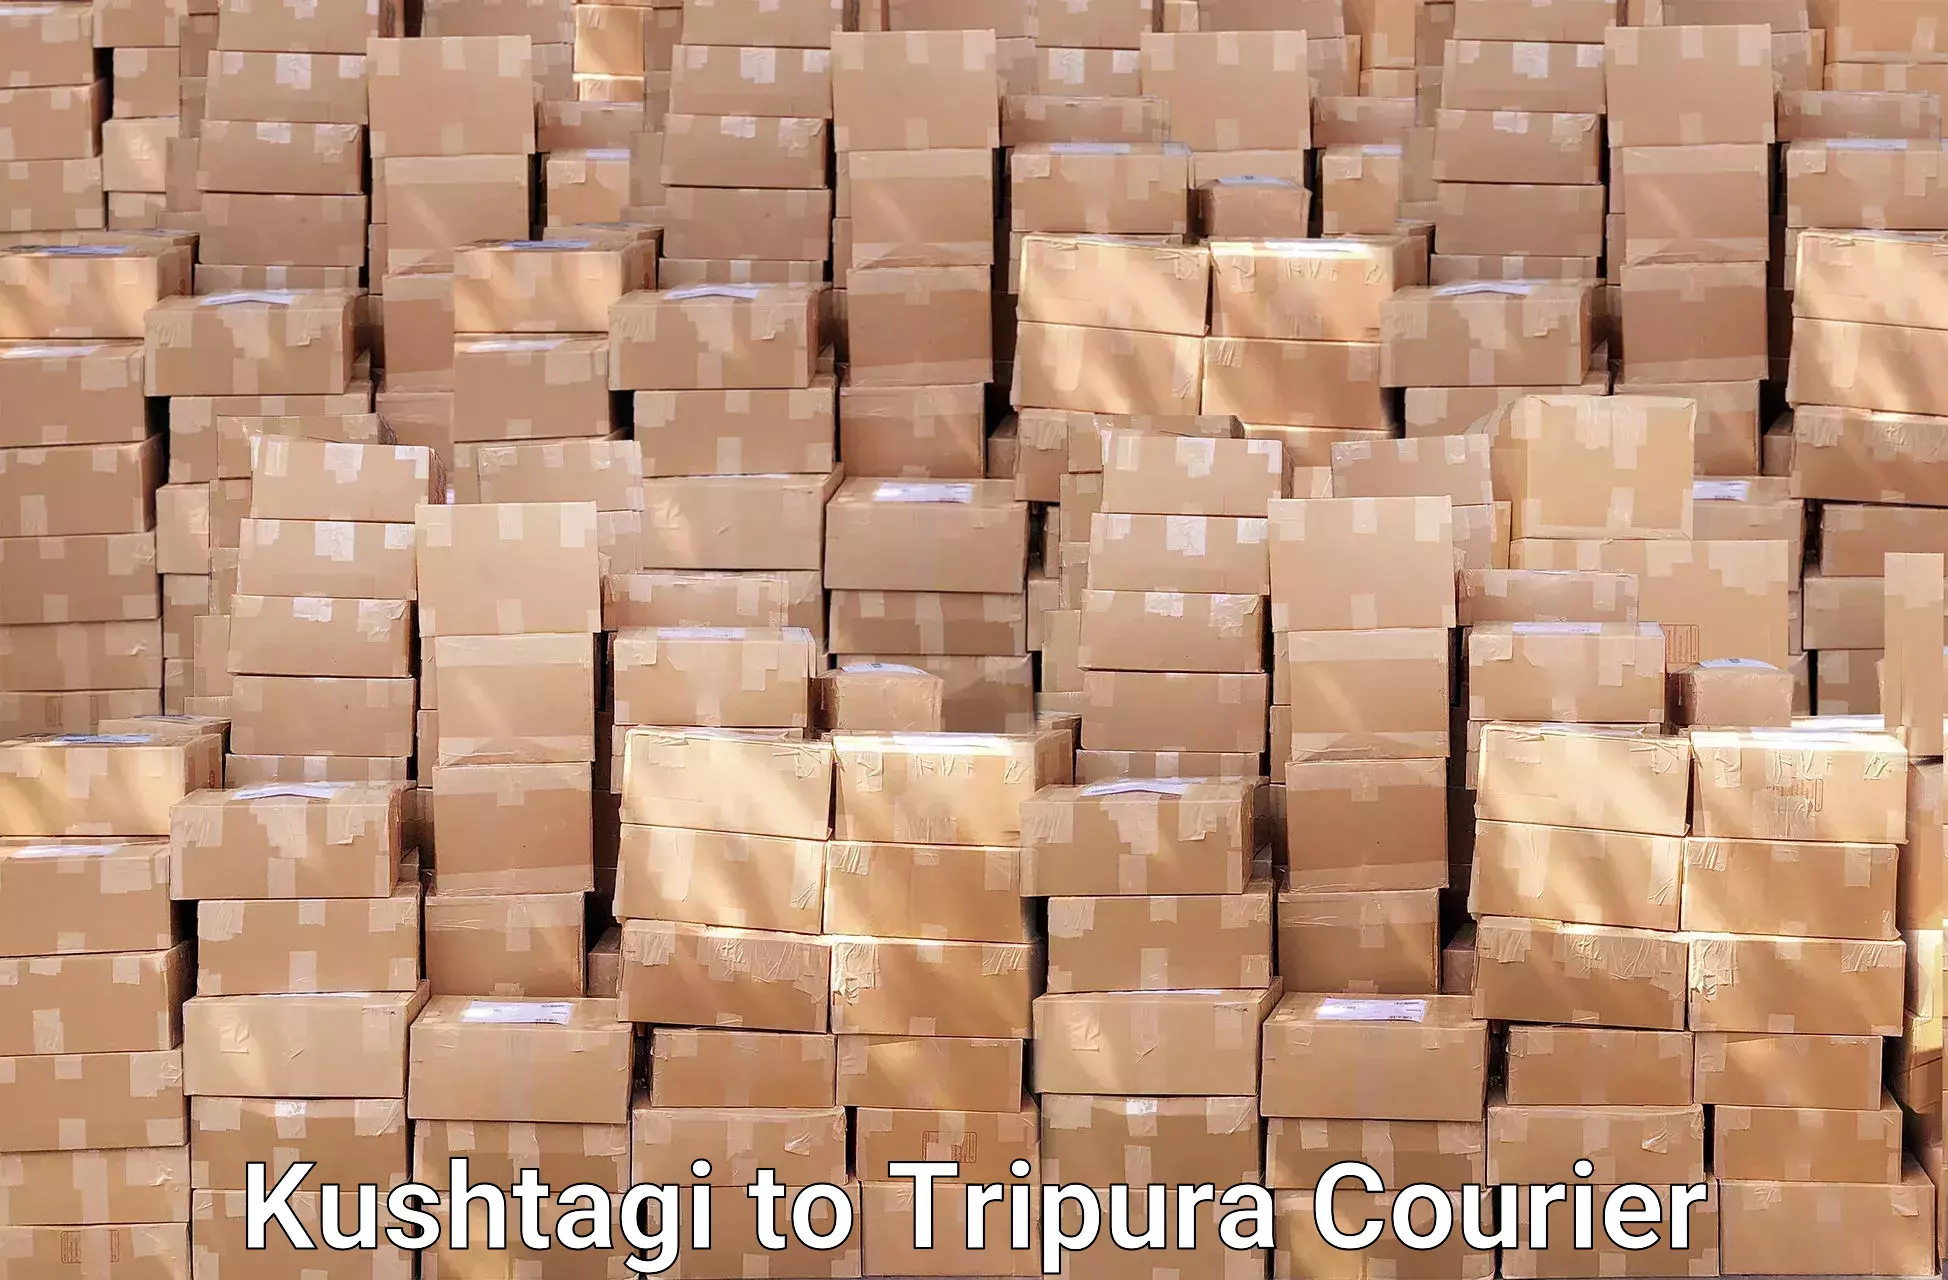 Quality relocation services in Kushtagi to Tripura